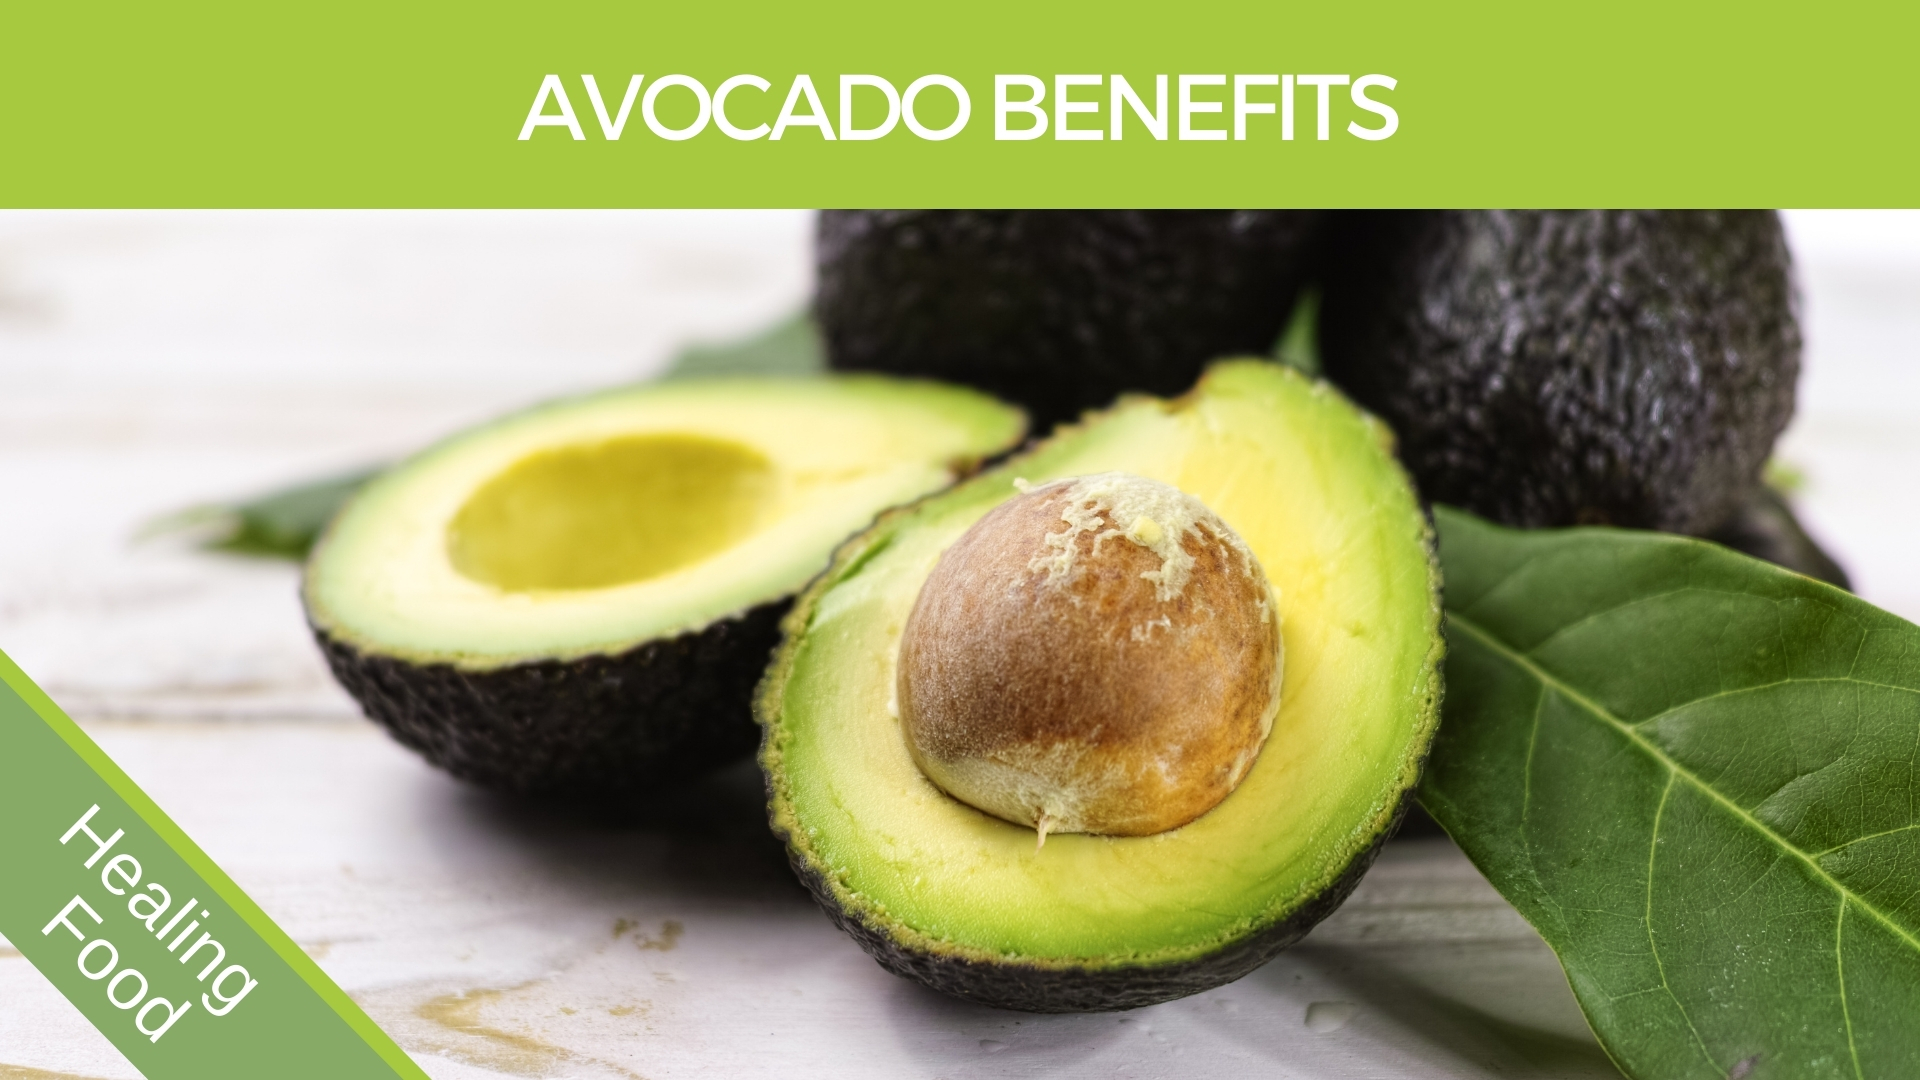 Avocado Benefits